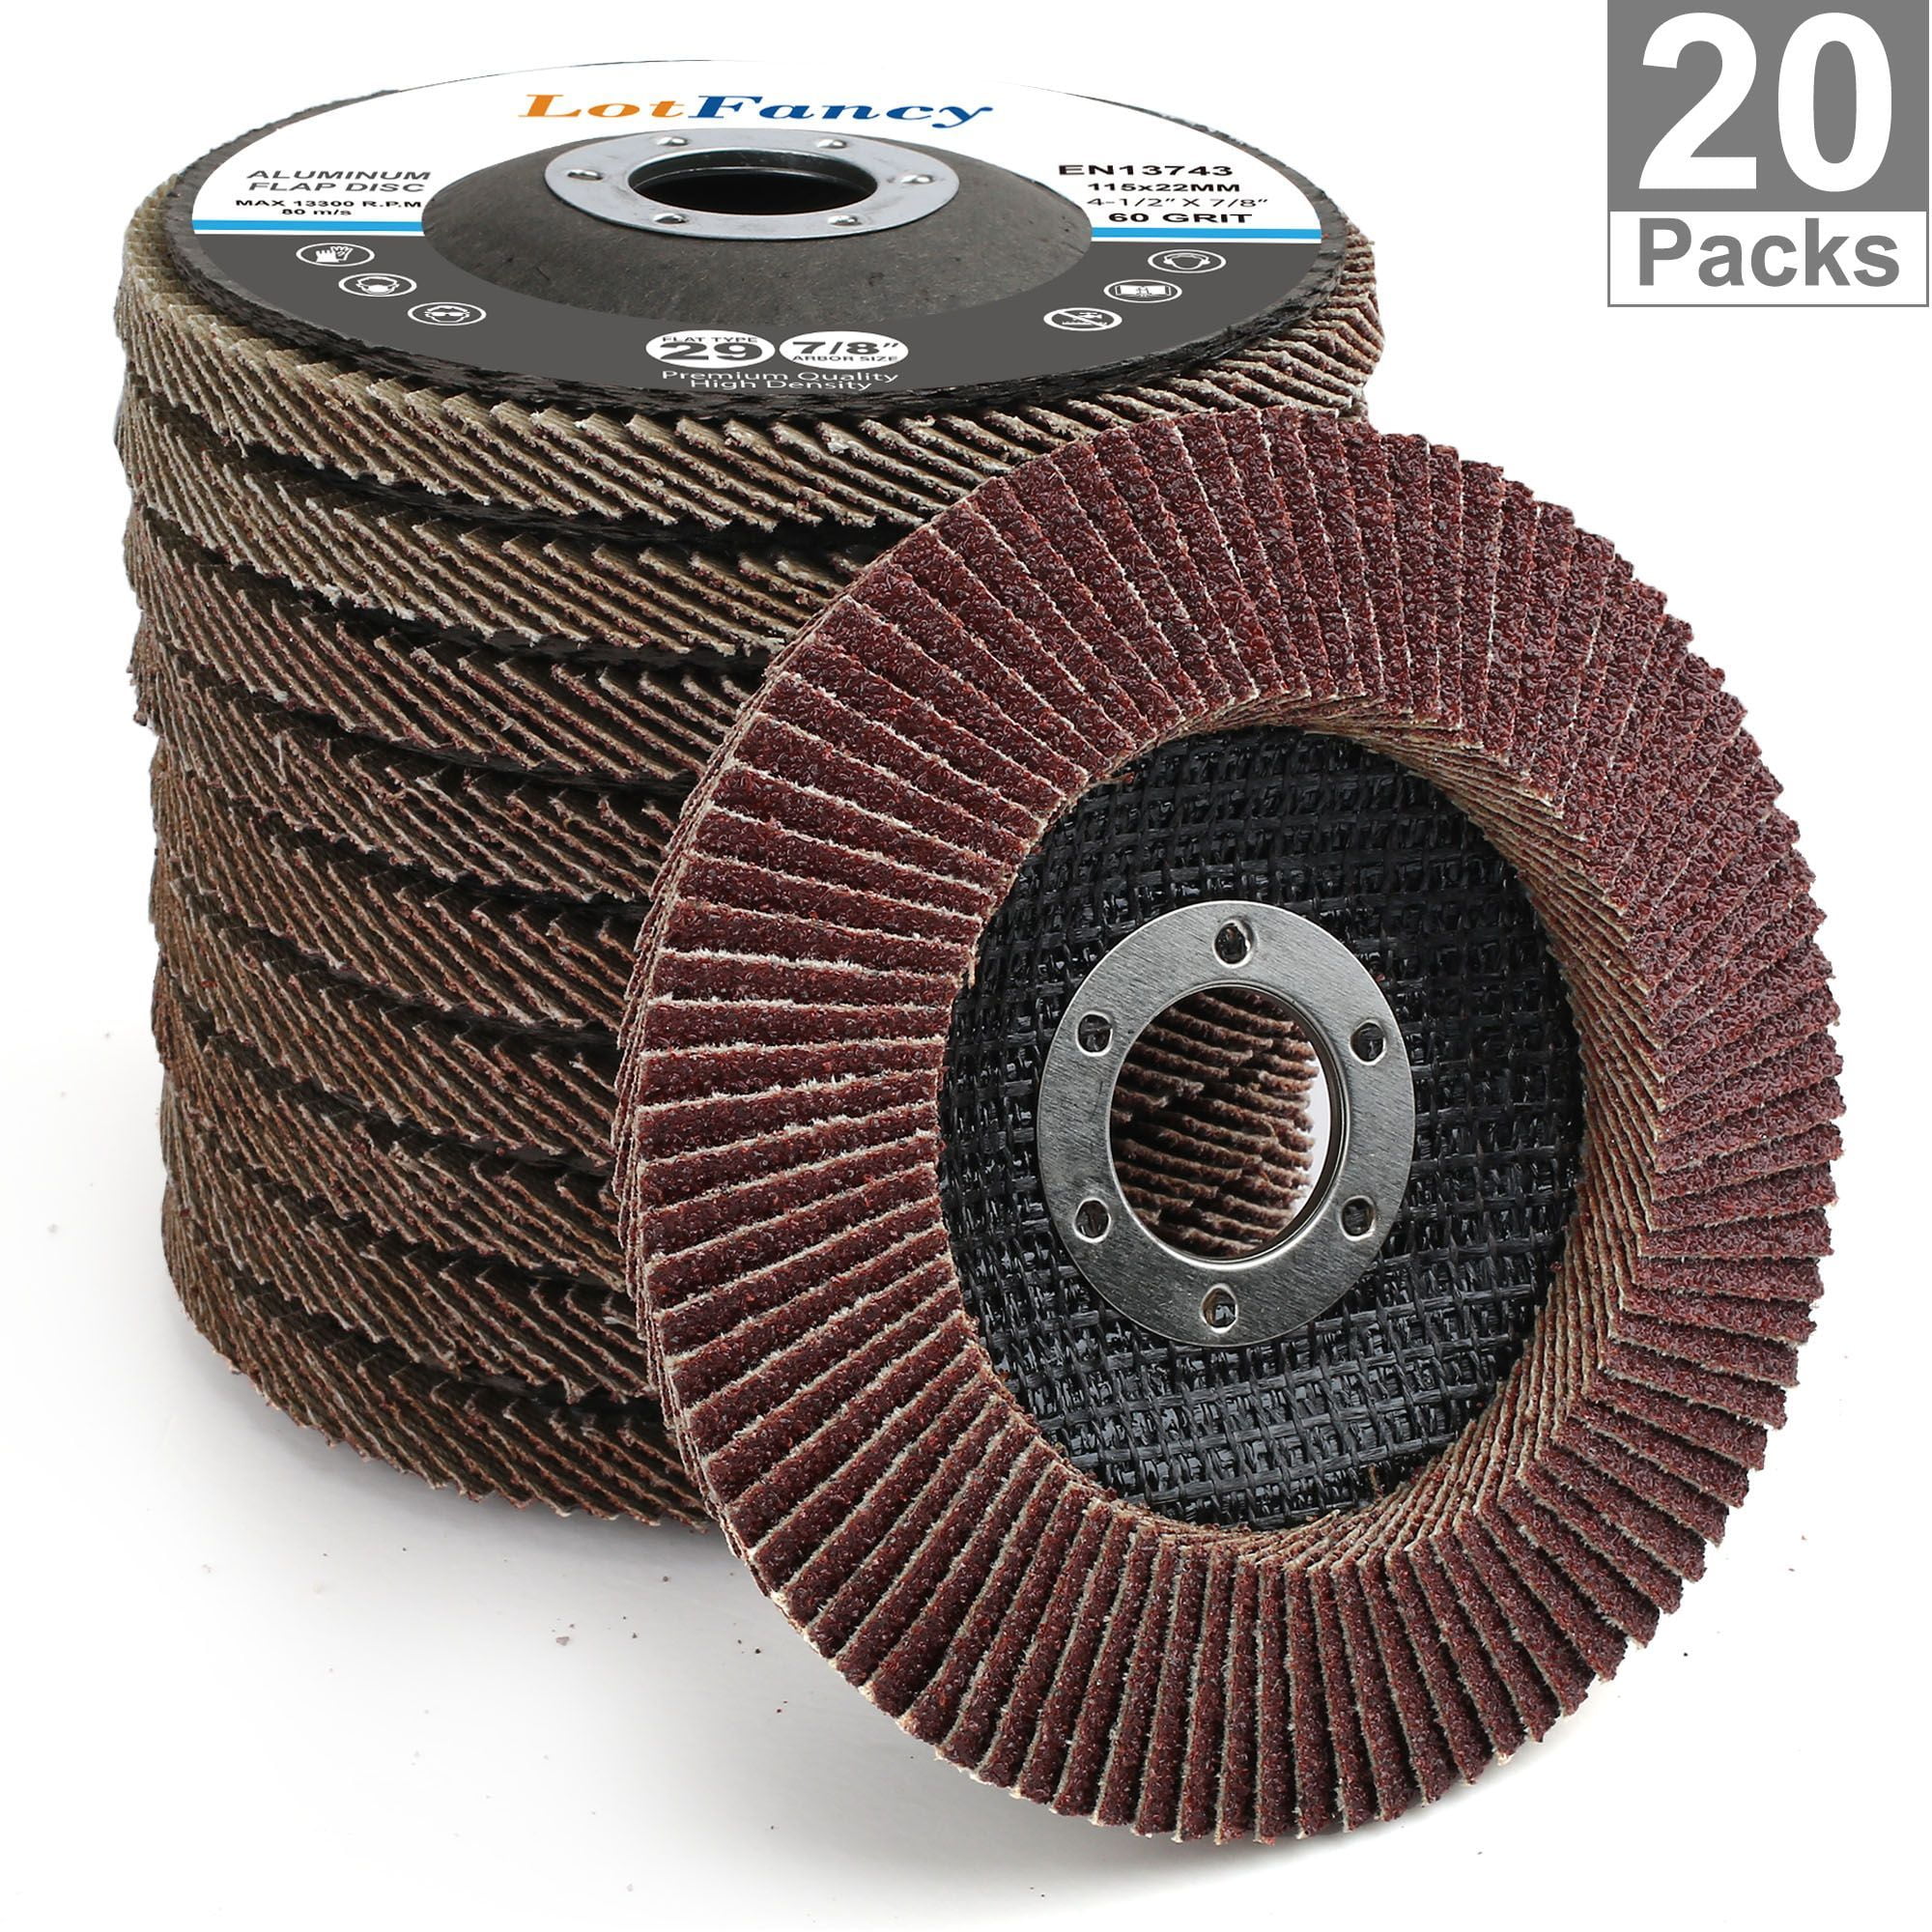 10pc 4-1/2" 40 Grit Flat Aluminum Oxide Flap Disc Grinding Wheel Sanding Disc